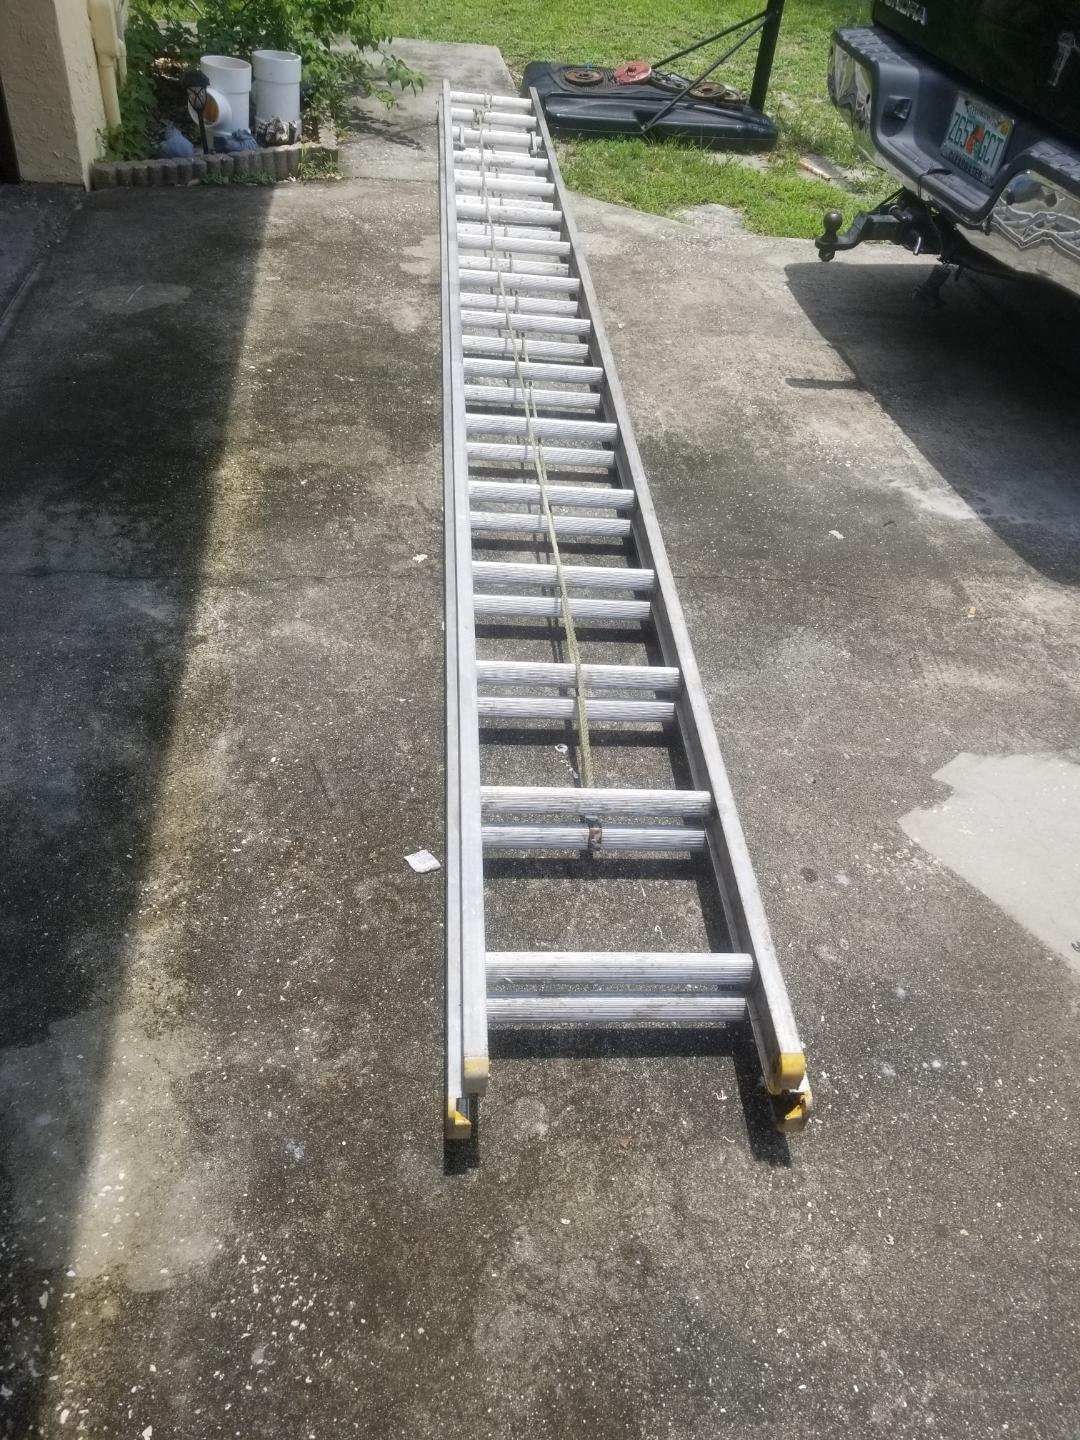 32 foot aluminum extension ladder